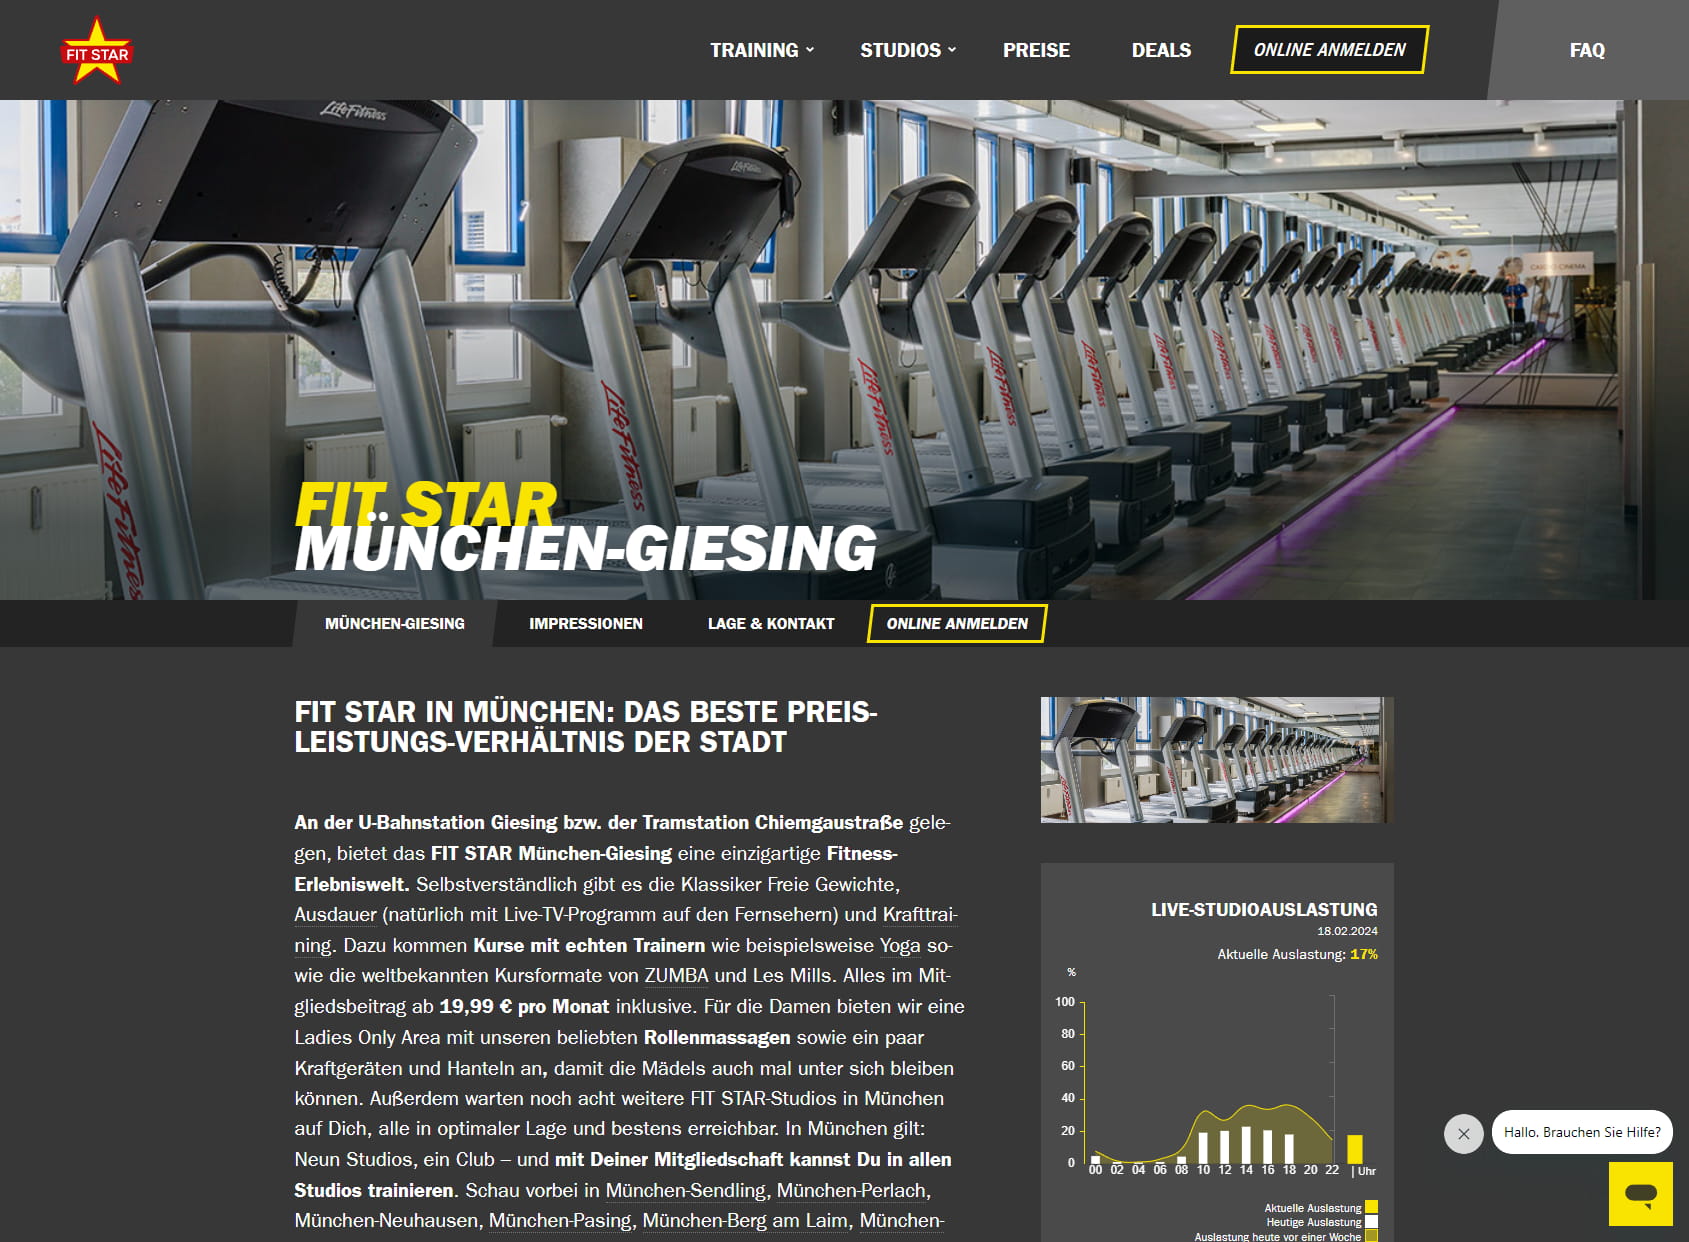 FIT STAR Fitnessstudio München-Giesing